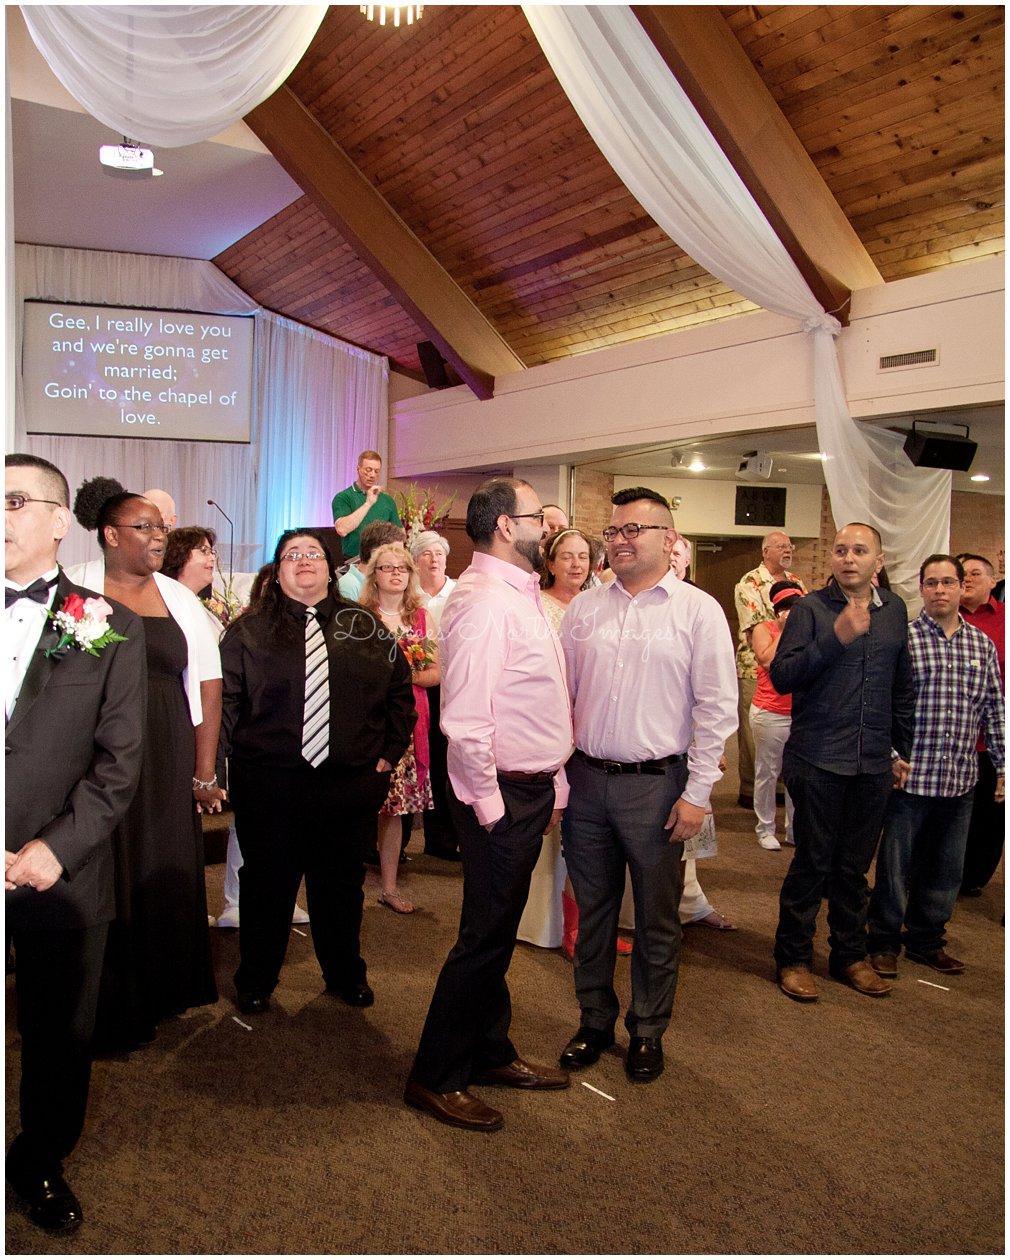 Resurrection Metropolitan Community Church mass same sex wedding by Degrees North Images